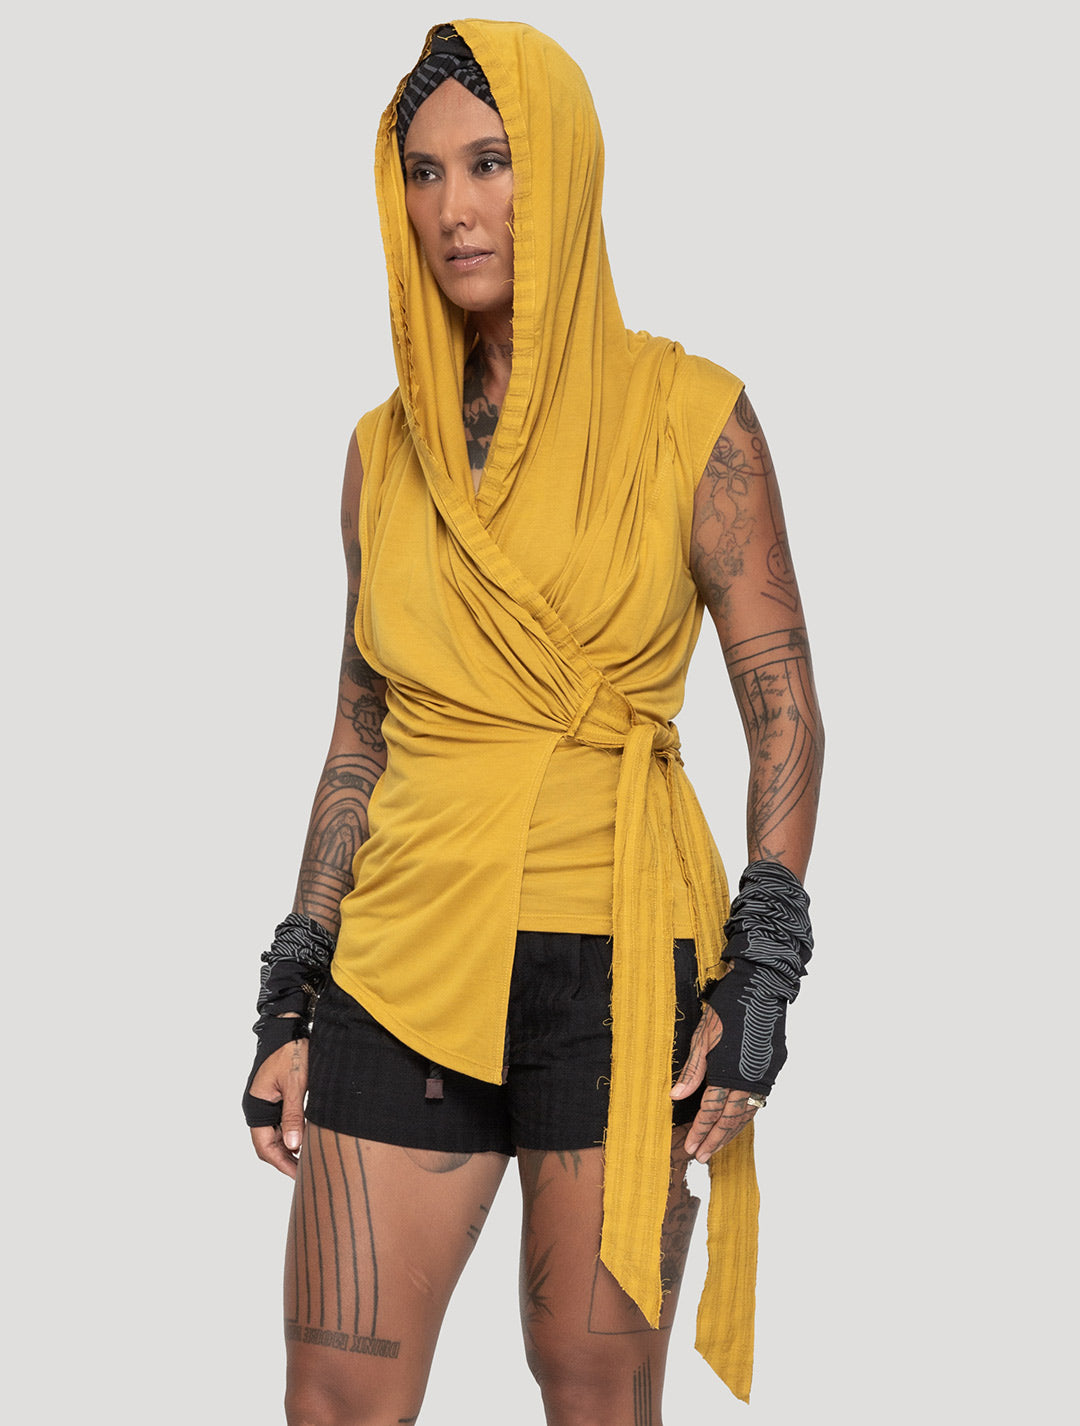 Saffron 'Sorcerer' 100% Bamboo Hooded Wrap Top - Psylo Fashion